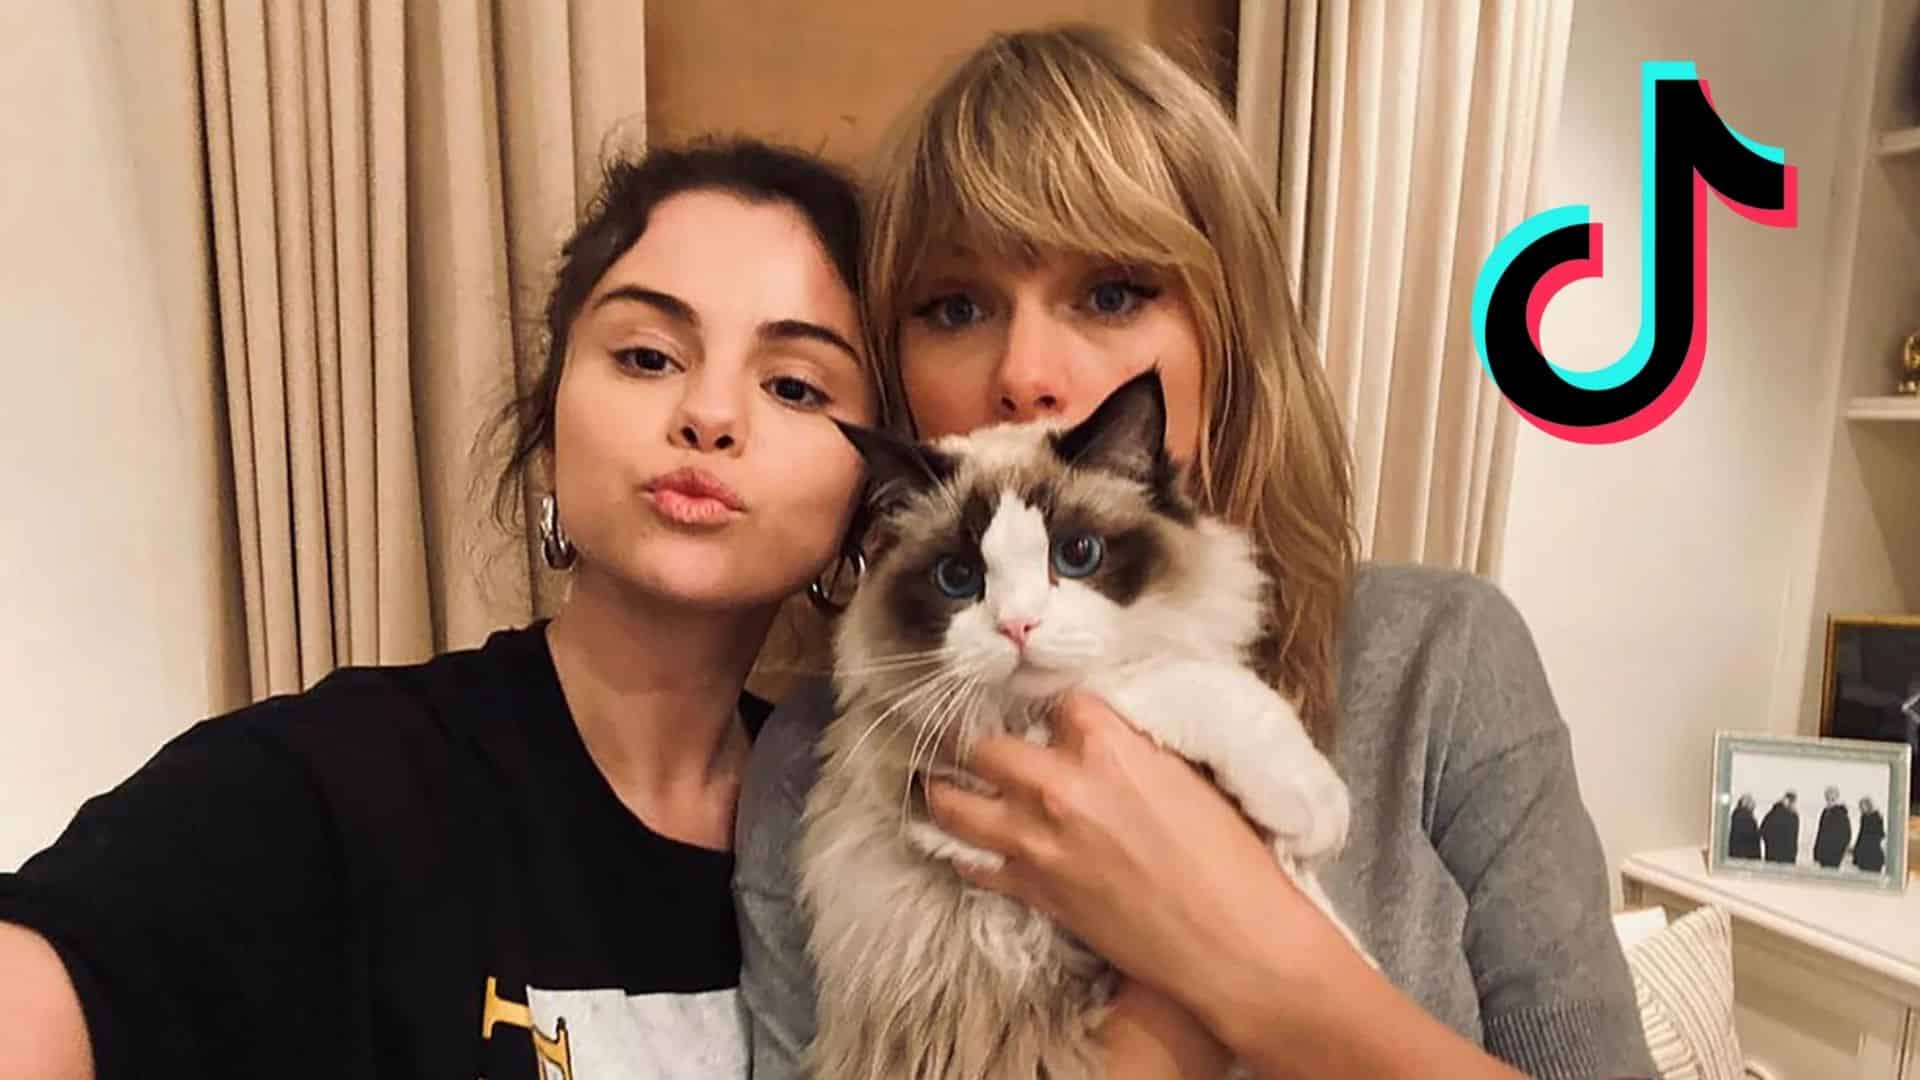 Taylor Swift and Selena Gomez holding a cat next to the TikTok logo